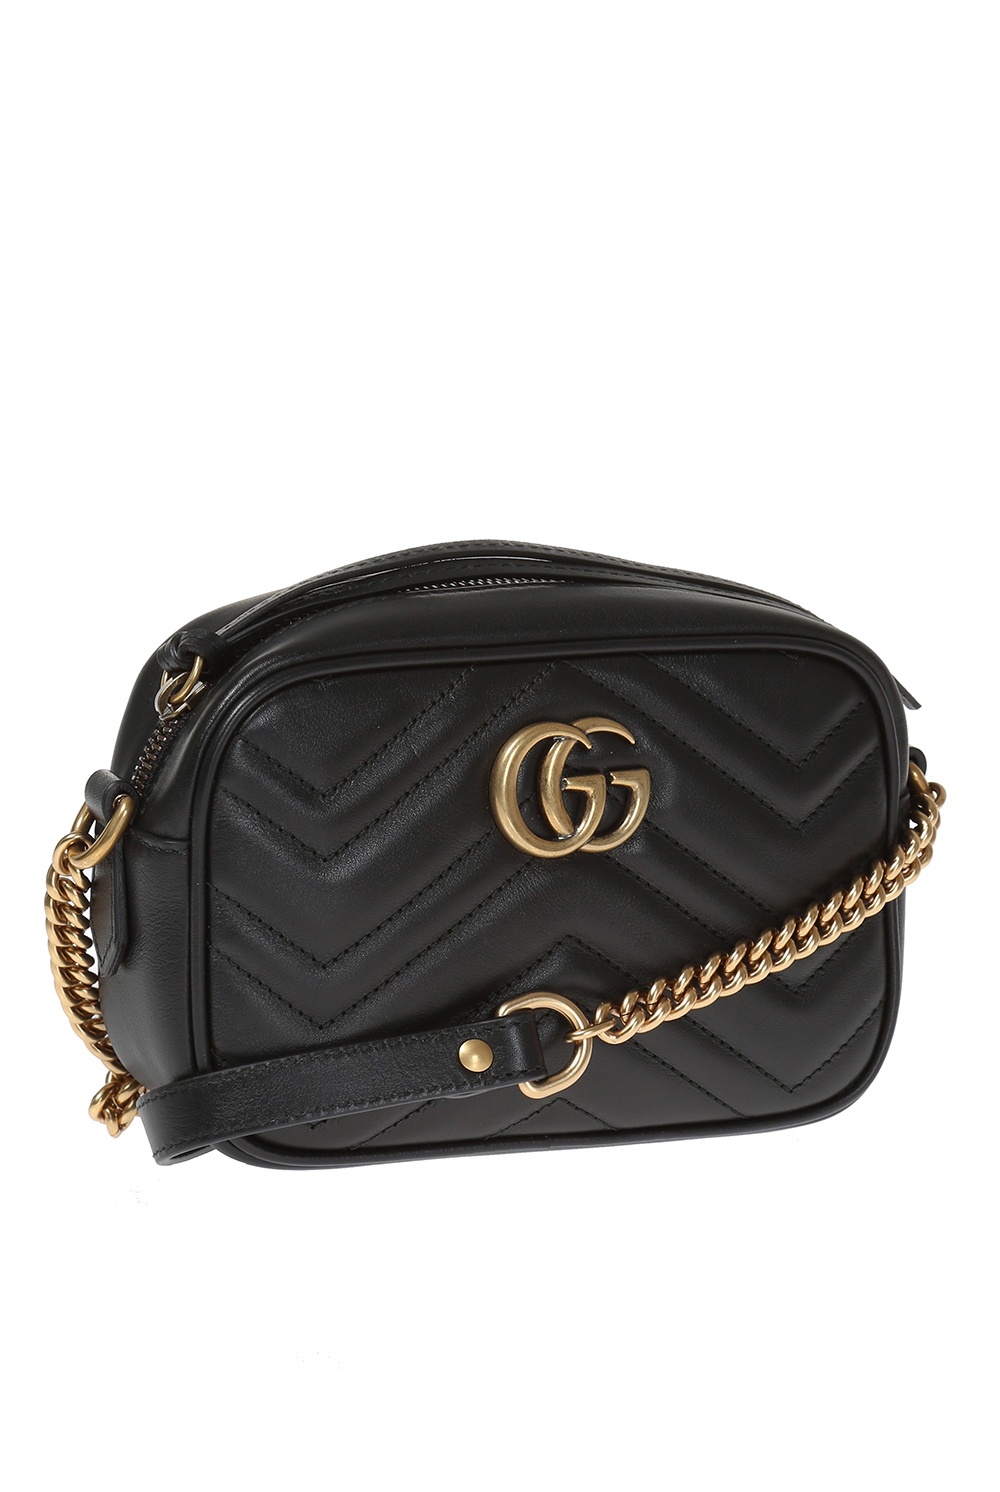 &#39;GG Marmont&#39; shoulder bag Gucci - Vitkac GB